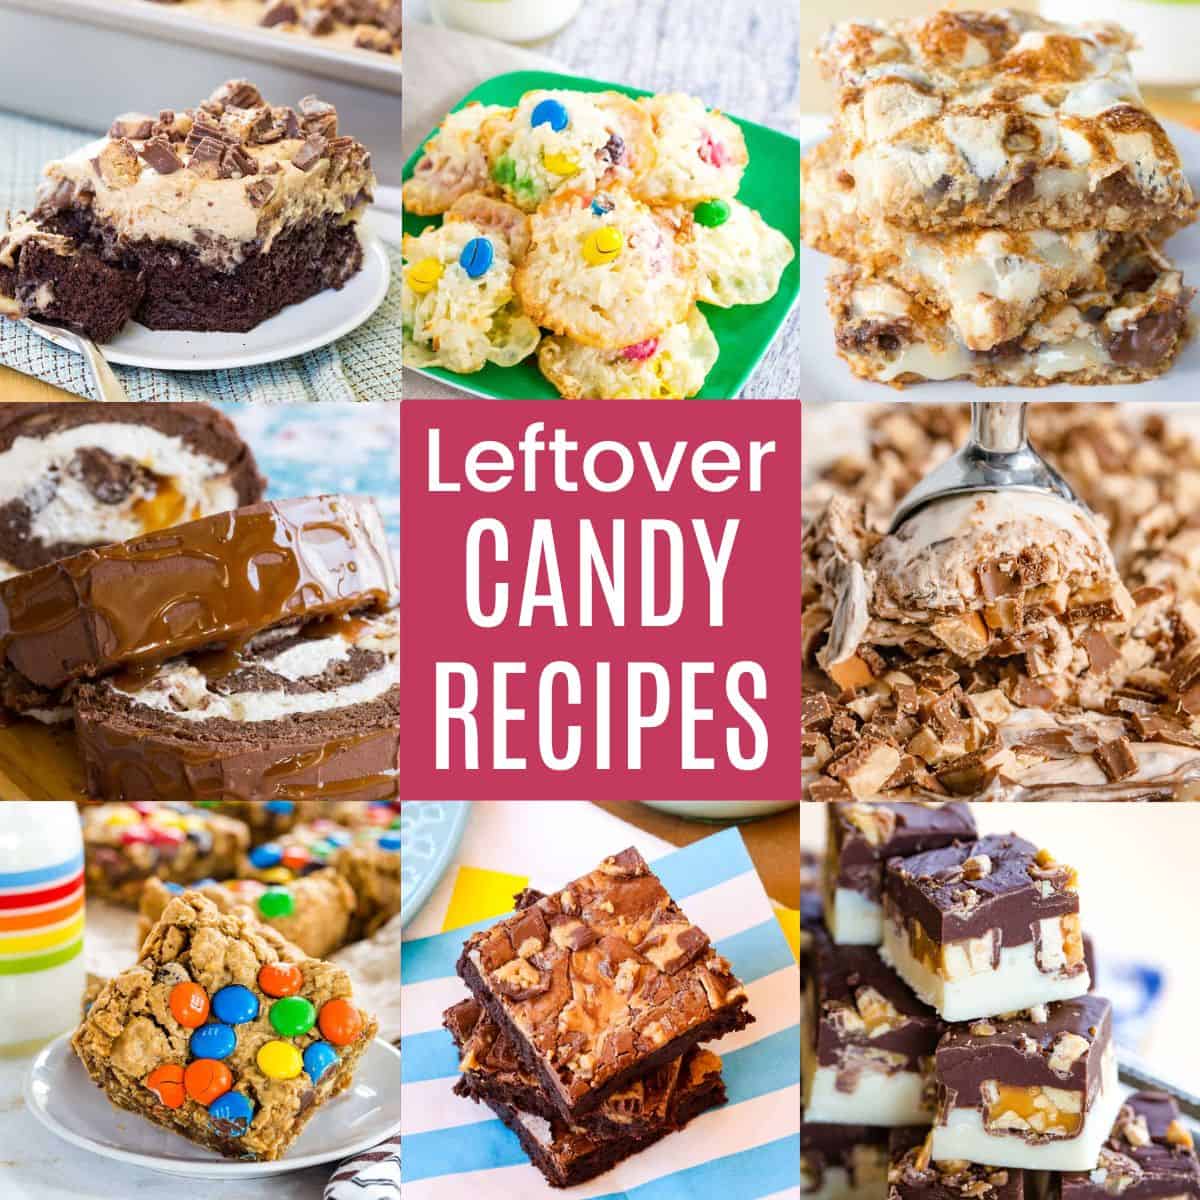 https://cupcakesandkalechips.com/wp-content/uploads/2019/11/Best-Leftover-Candy-Dessert-Recipes.jpg